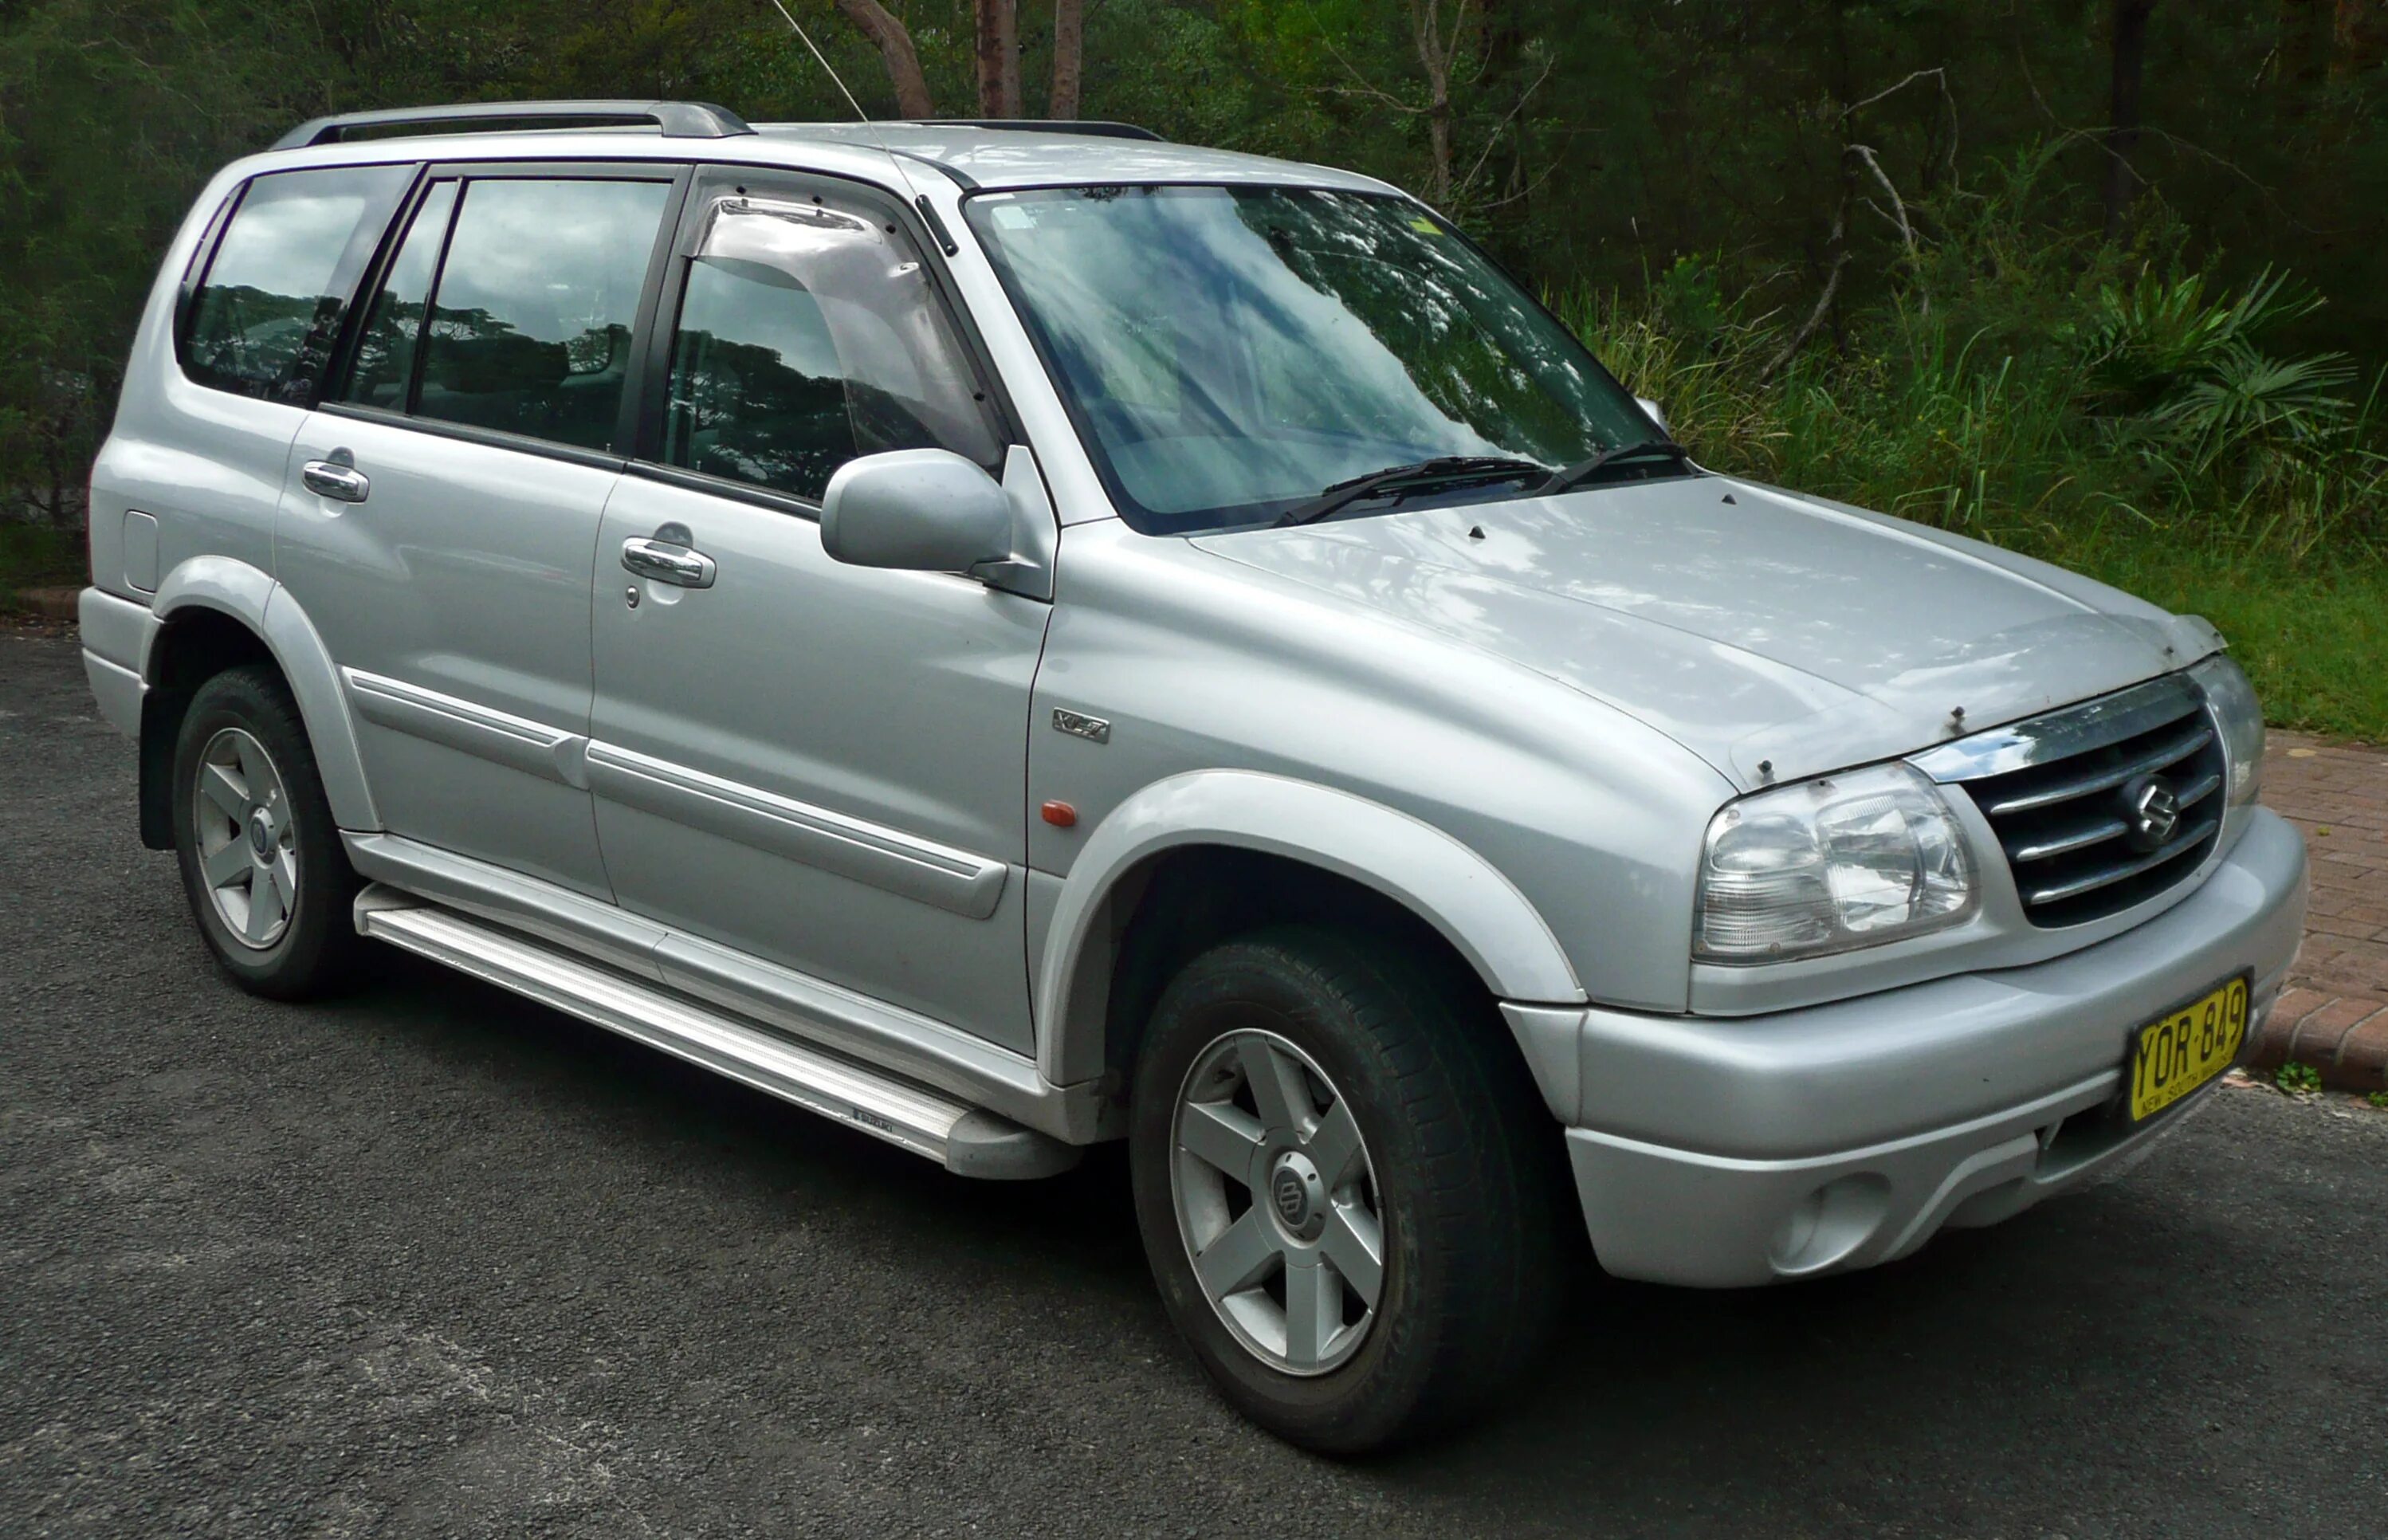 Suzuki vitara xl7. Suzuki Grand Vitara XL-7. Сущуки Грант Витара ХL 7. Гранд Витара xl7. Suzuki Vitara XL-7 2001.